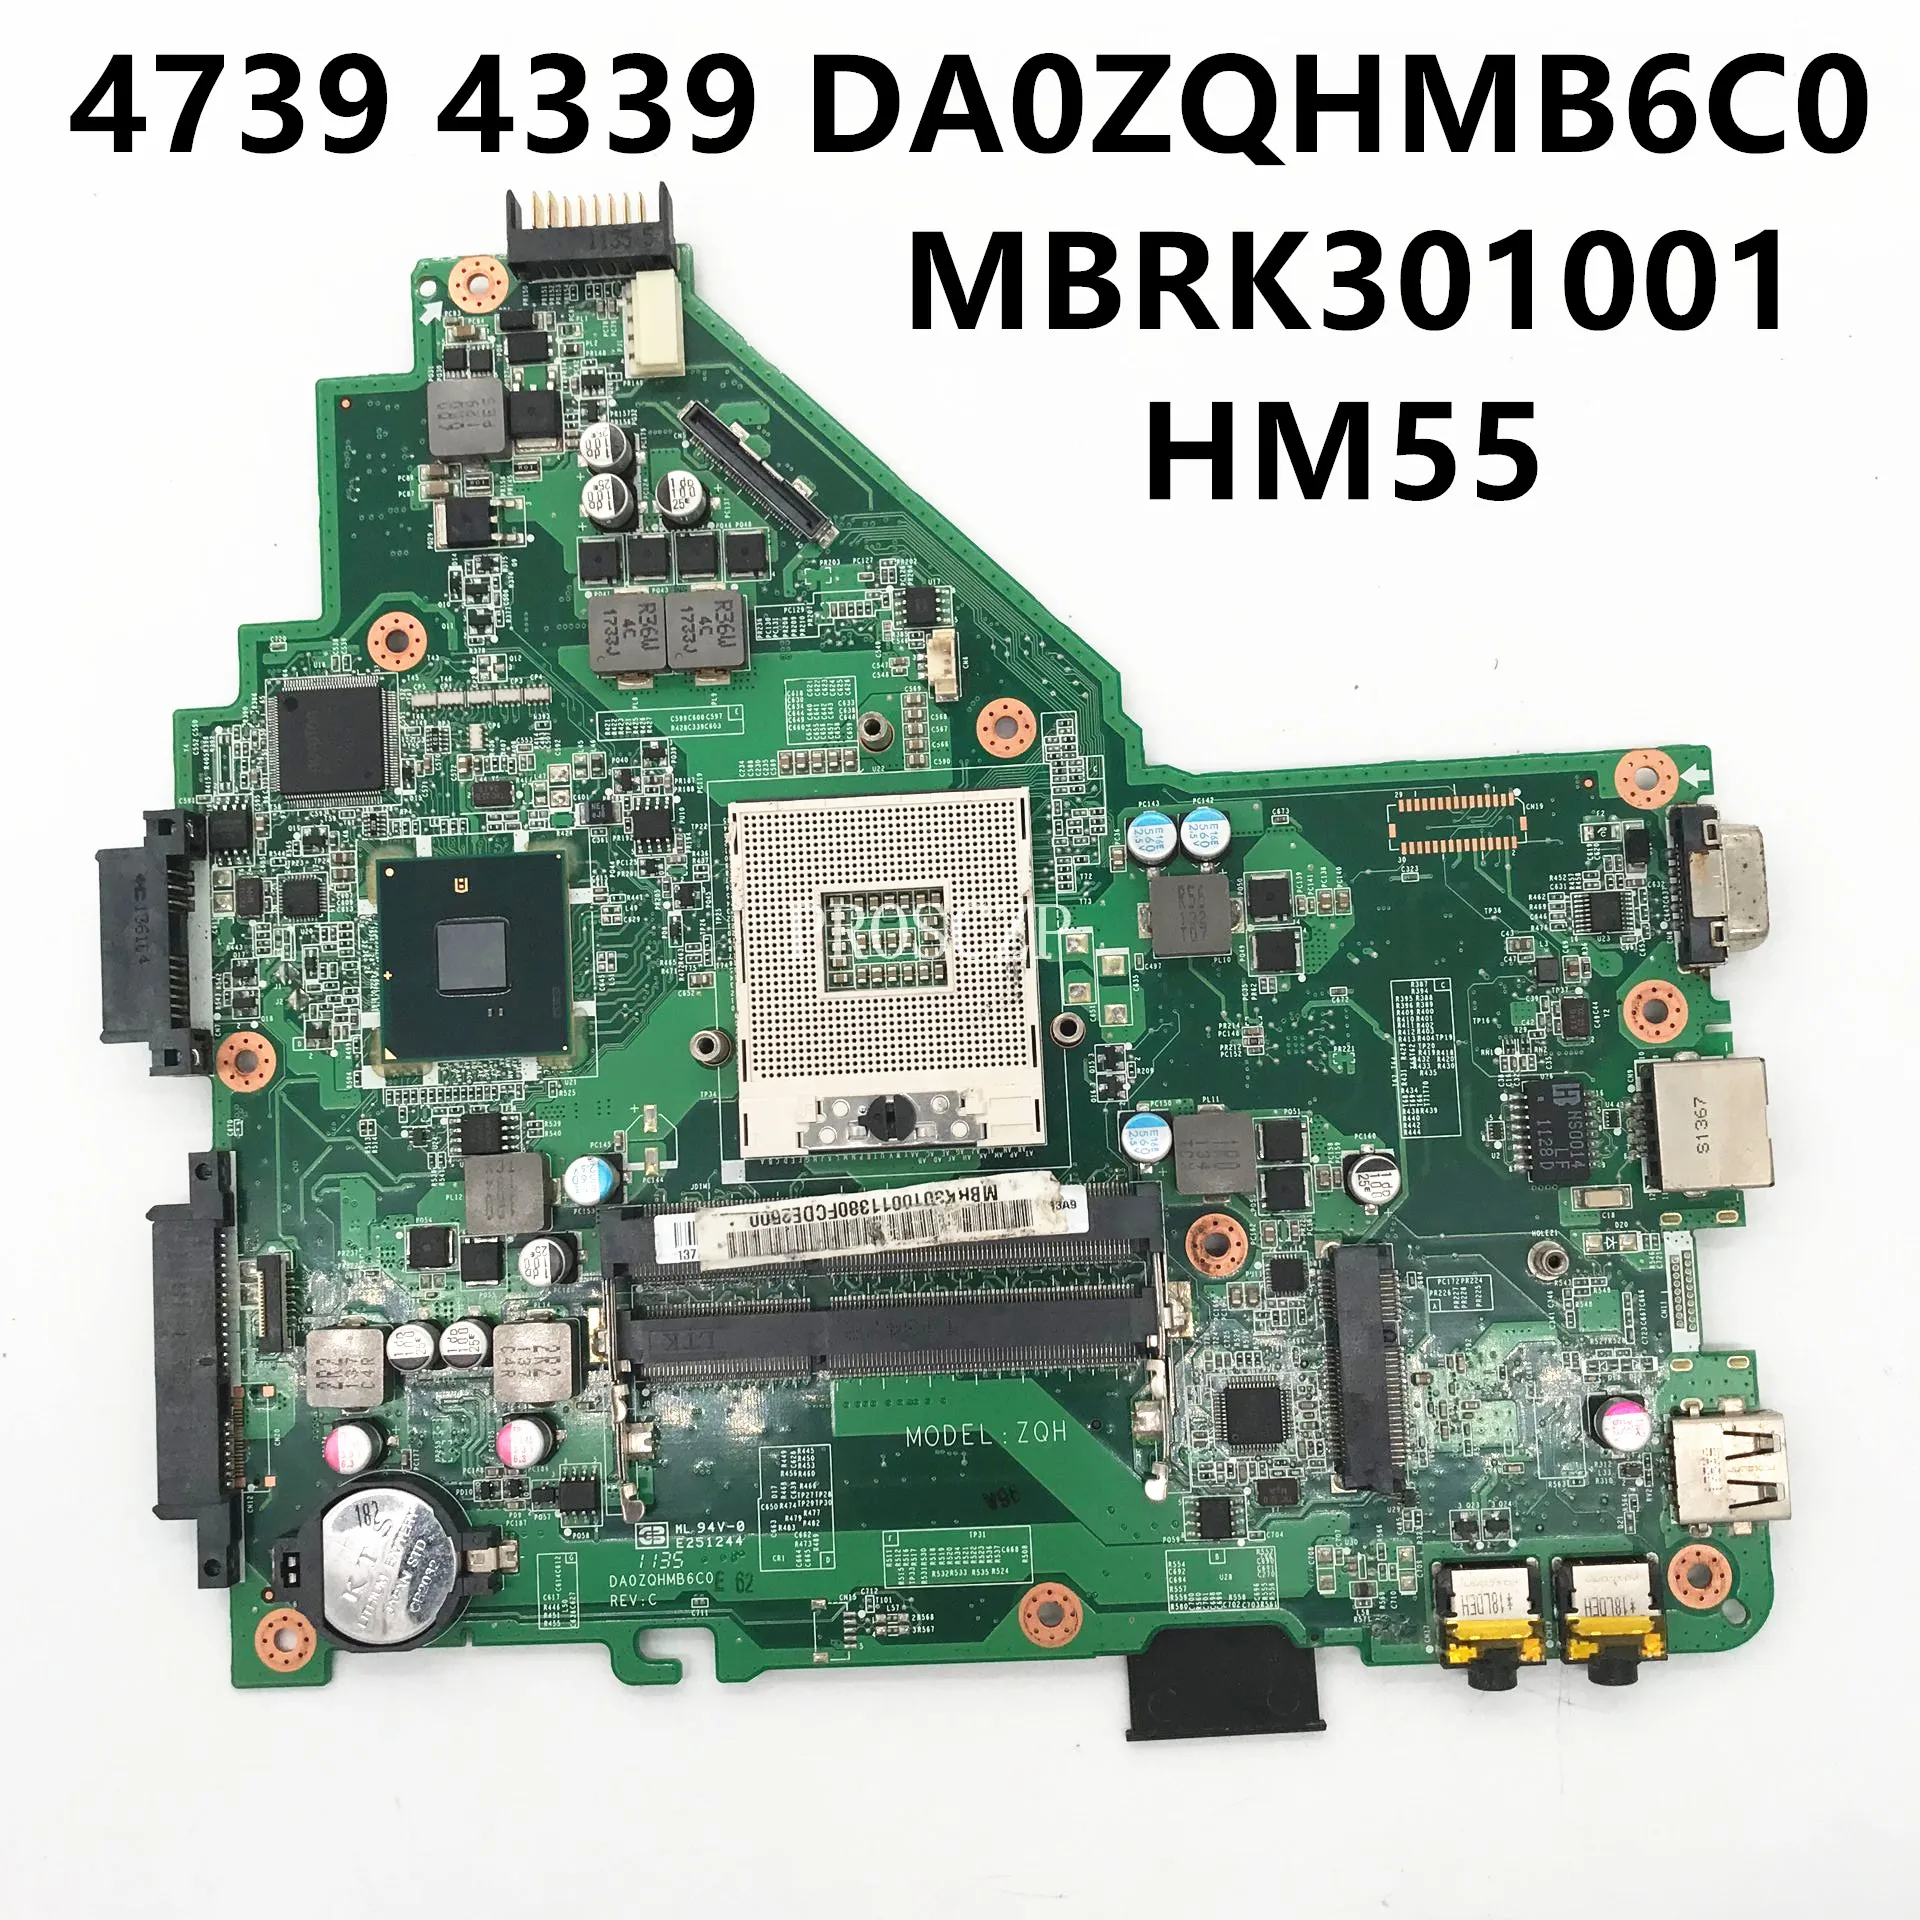 

DA0ZQHMB6C0 Mainboard For Acer Aspire 4339 4739 Intel Laptop Motherboard HM55 UMA DDR3 MBRK306001 MBRK301001 100% Full Tested